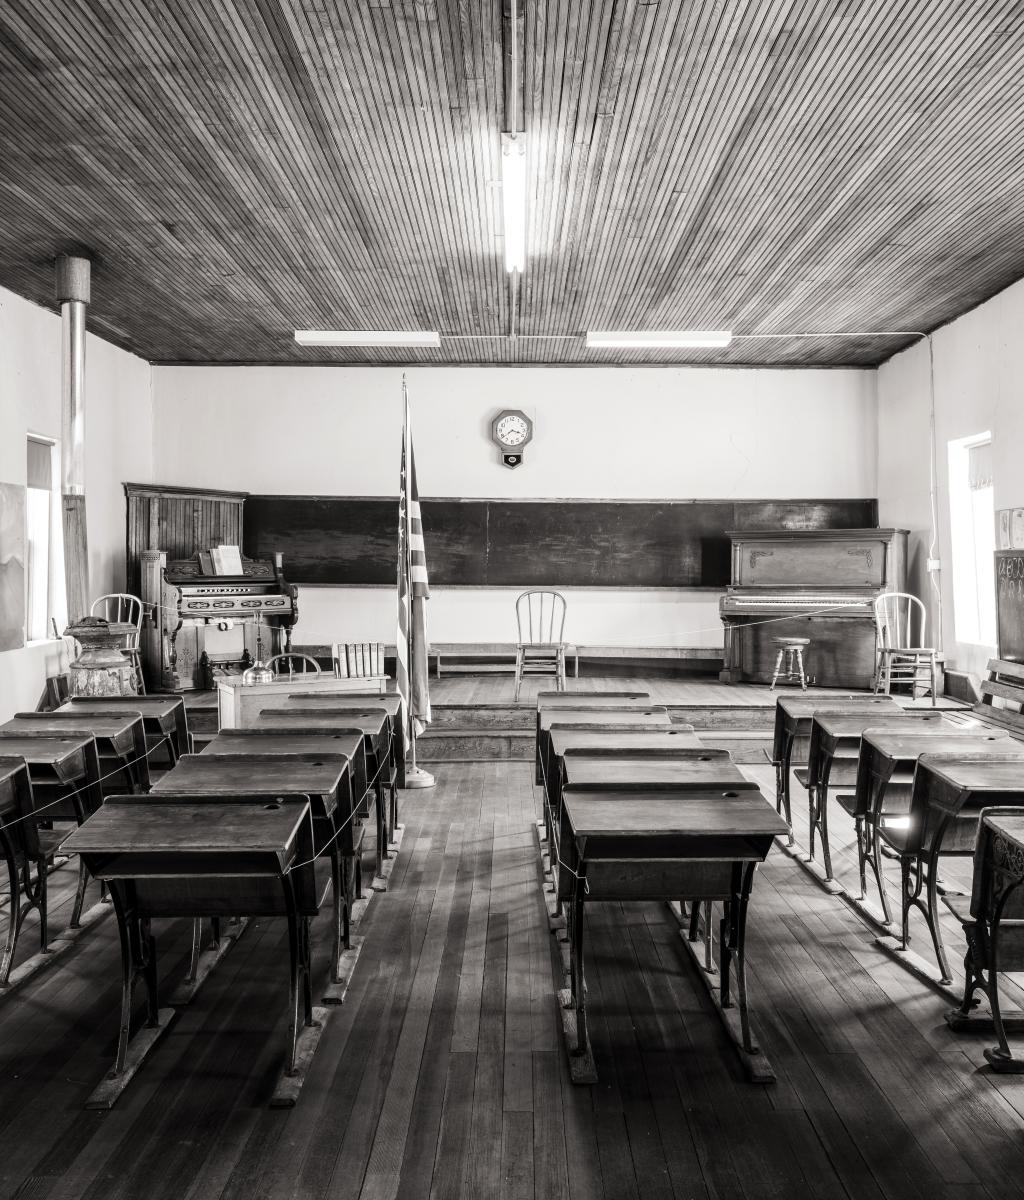 Kingston's schoolhouse turned museum